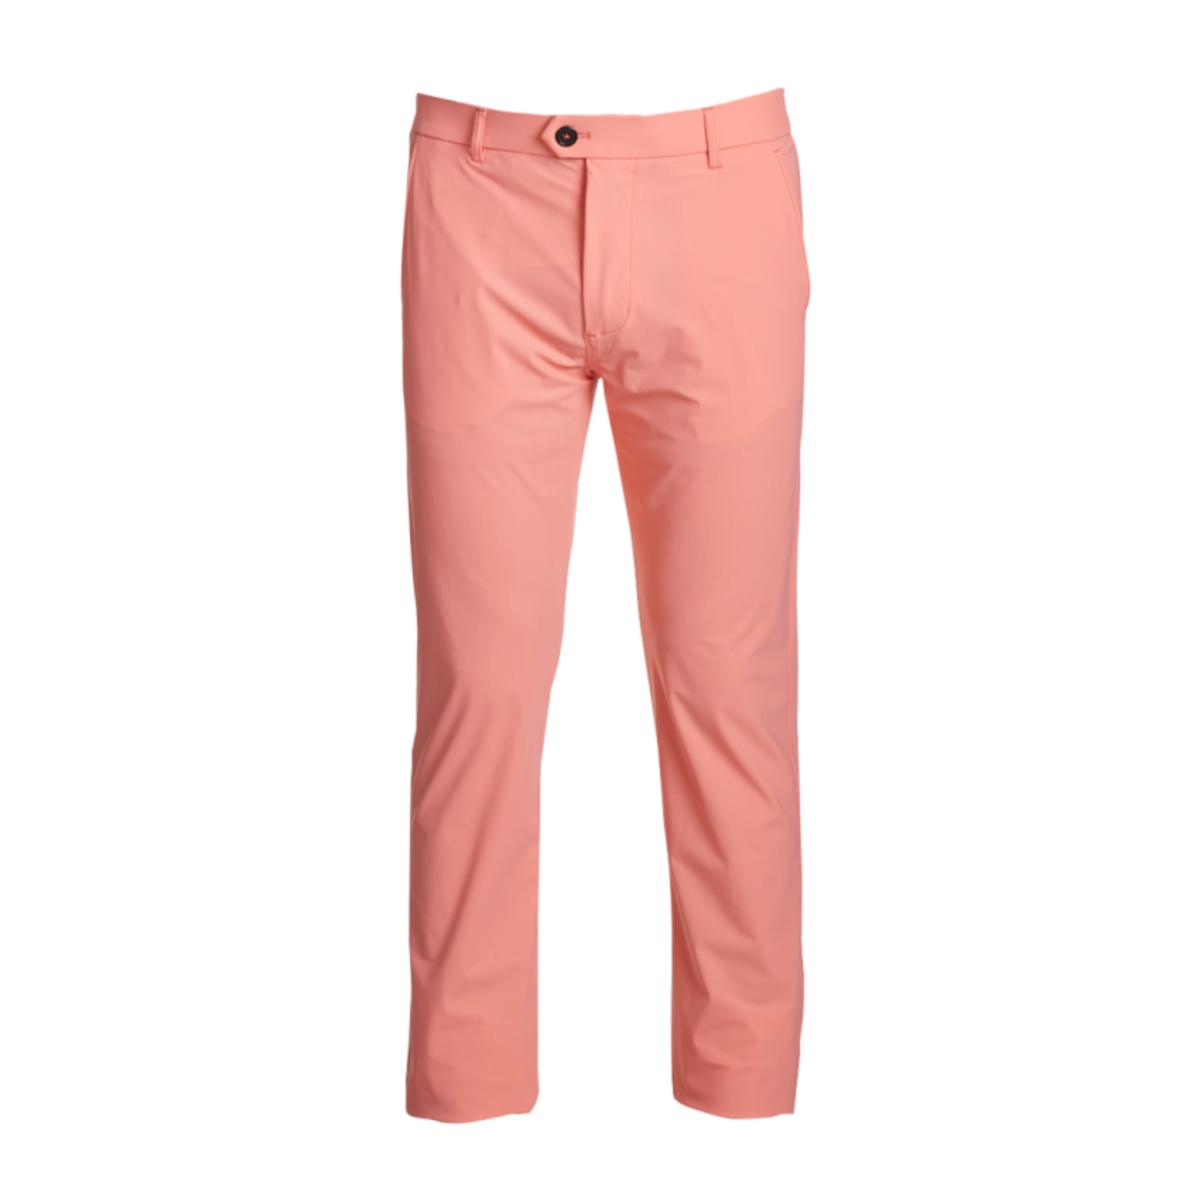 Greyson Clothiers' Montauk trouser in koi colorway. 